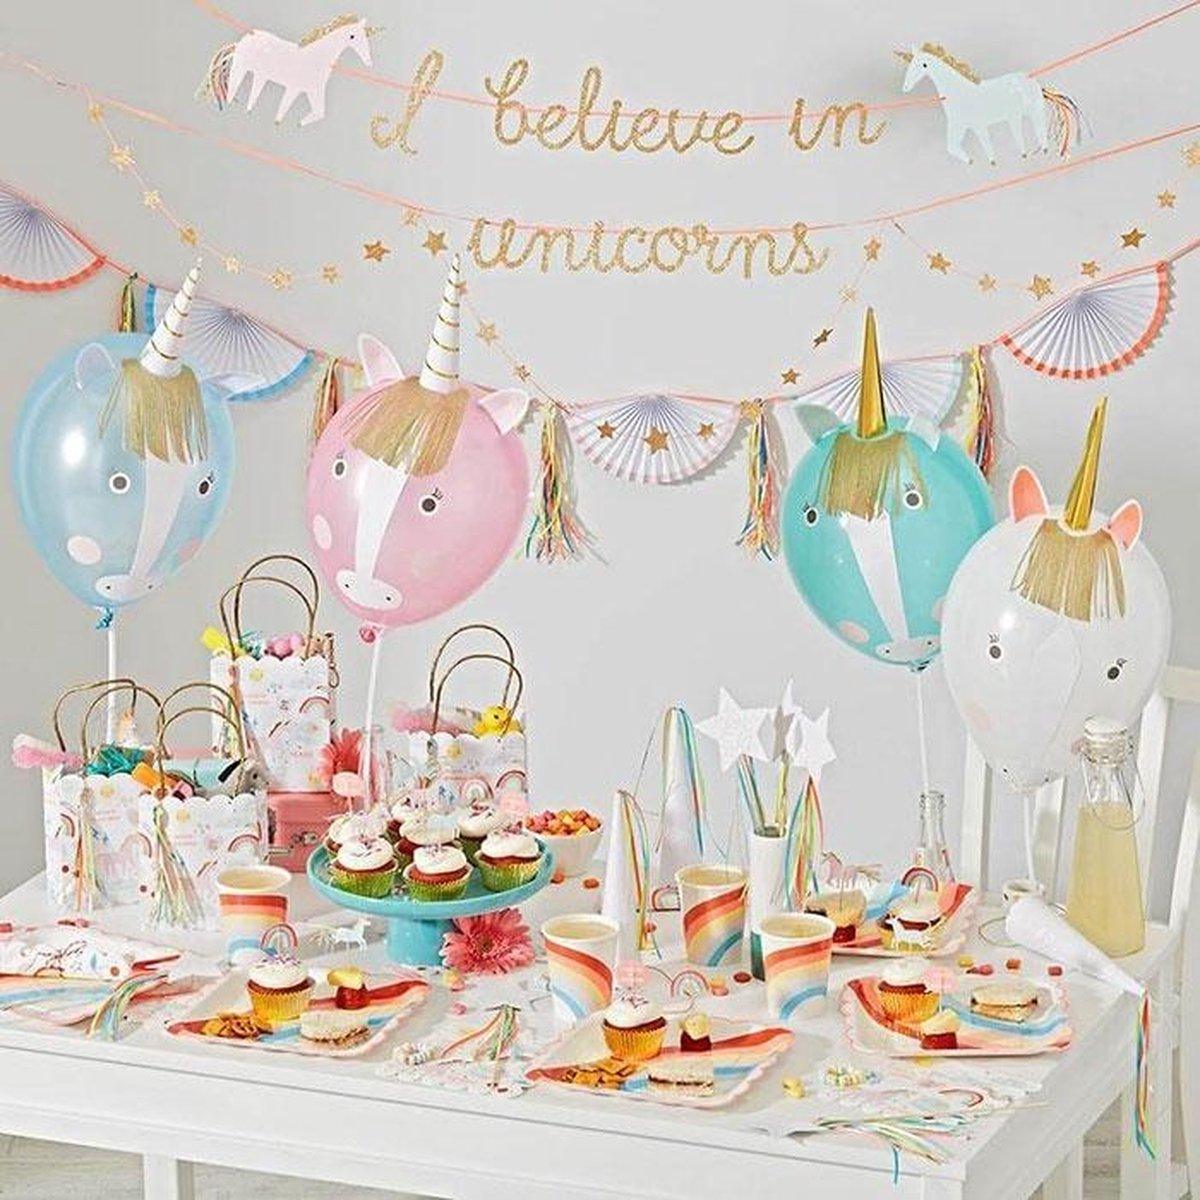 Meri Meri: balony jednorożce Unicorn Balloon Kit - Noski Noski